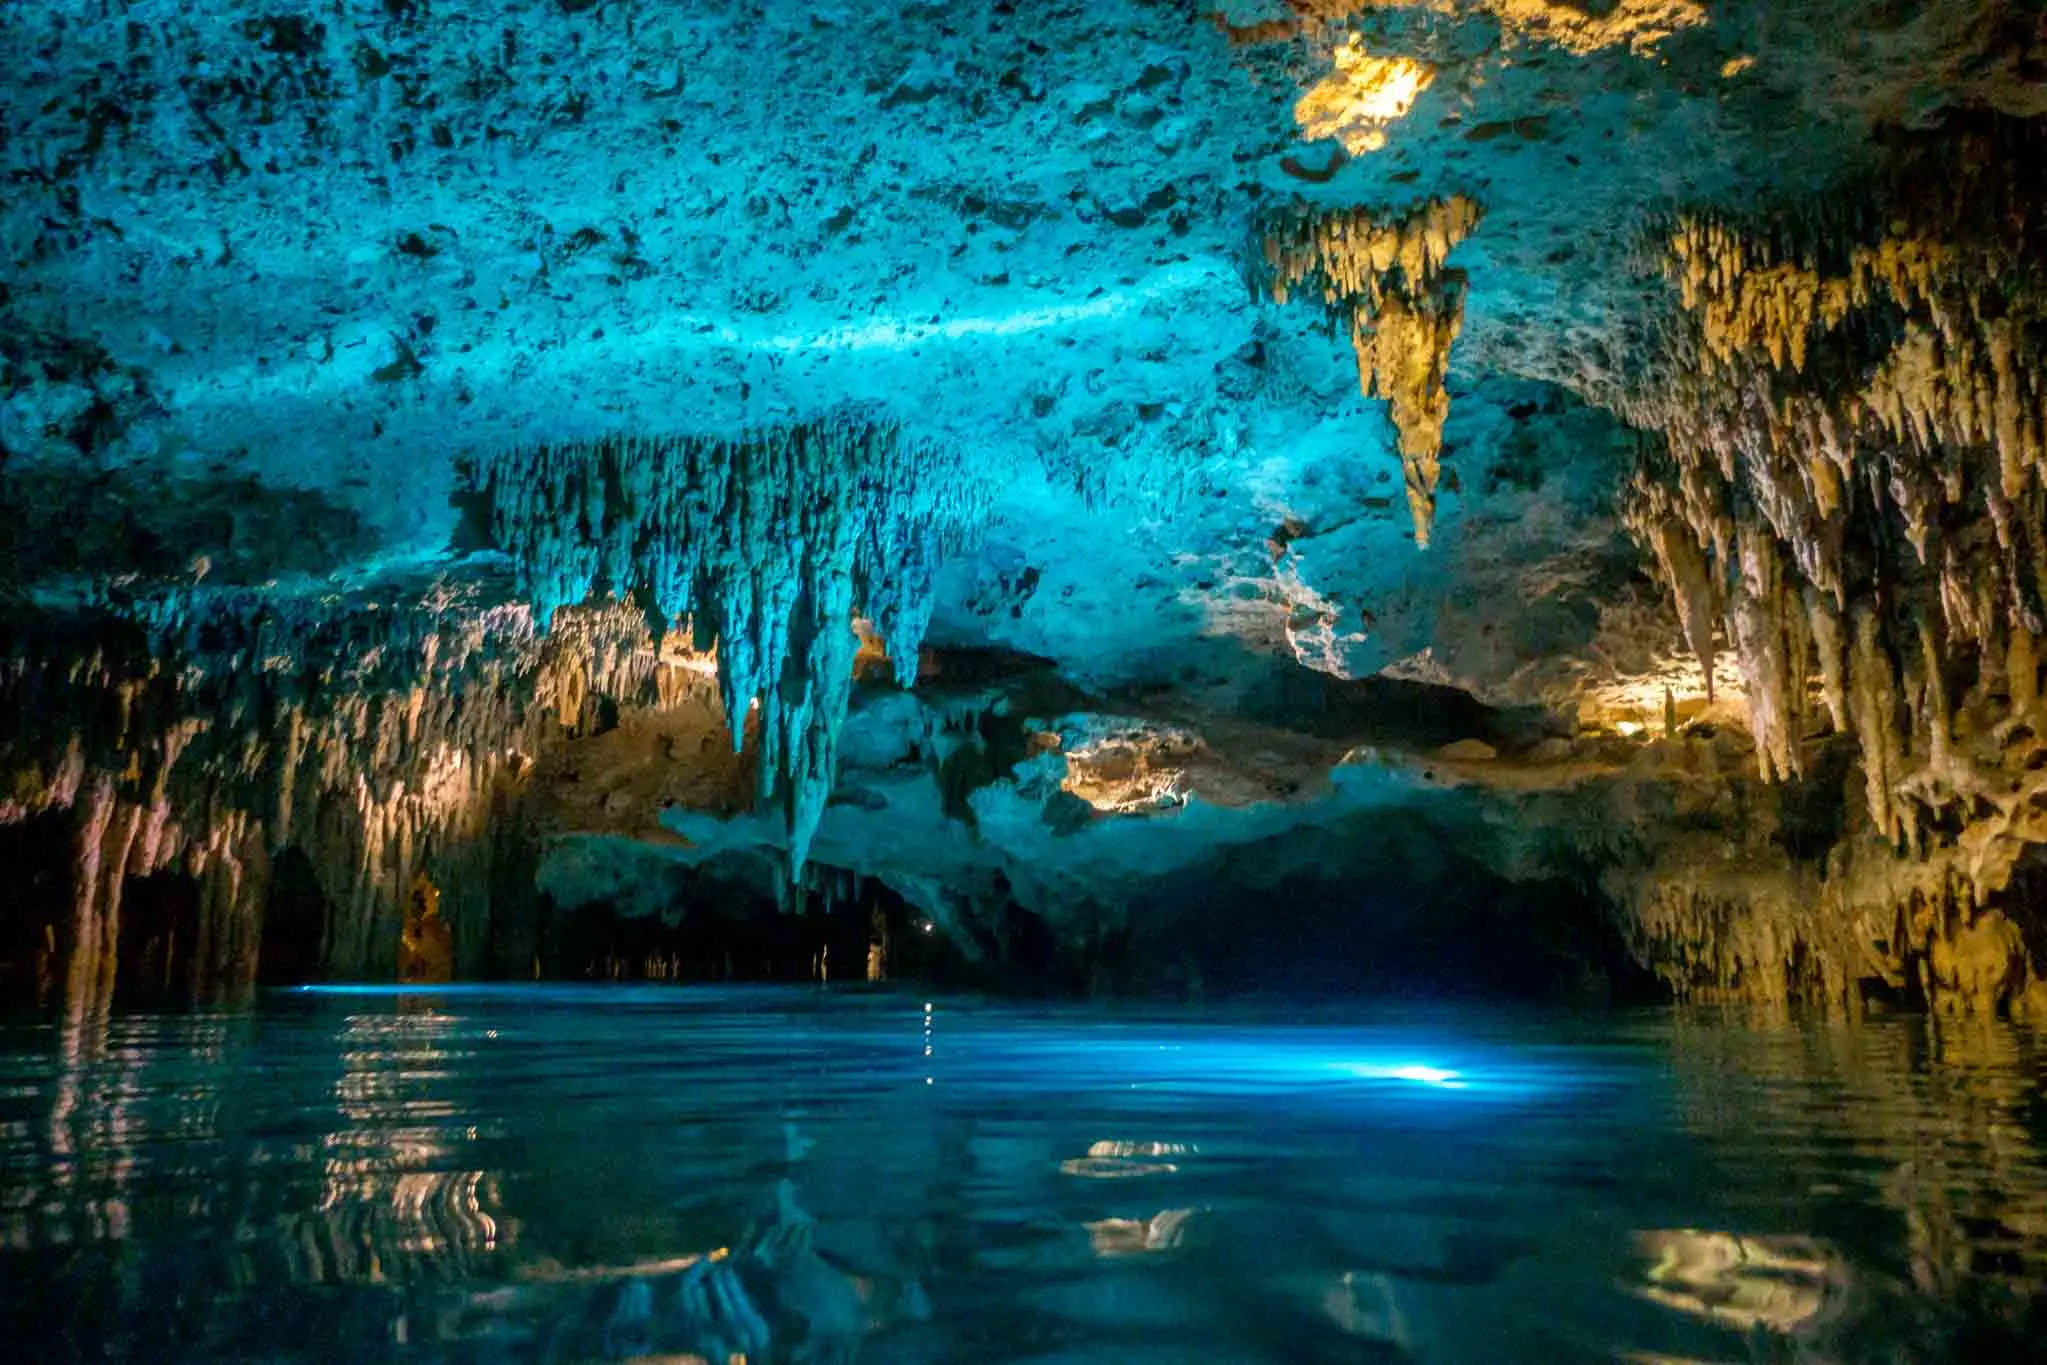 Underground river lit up with blue light